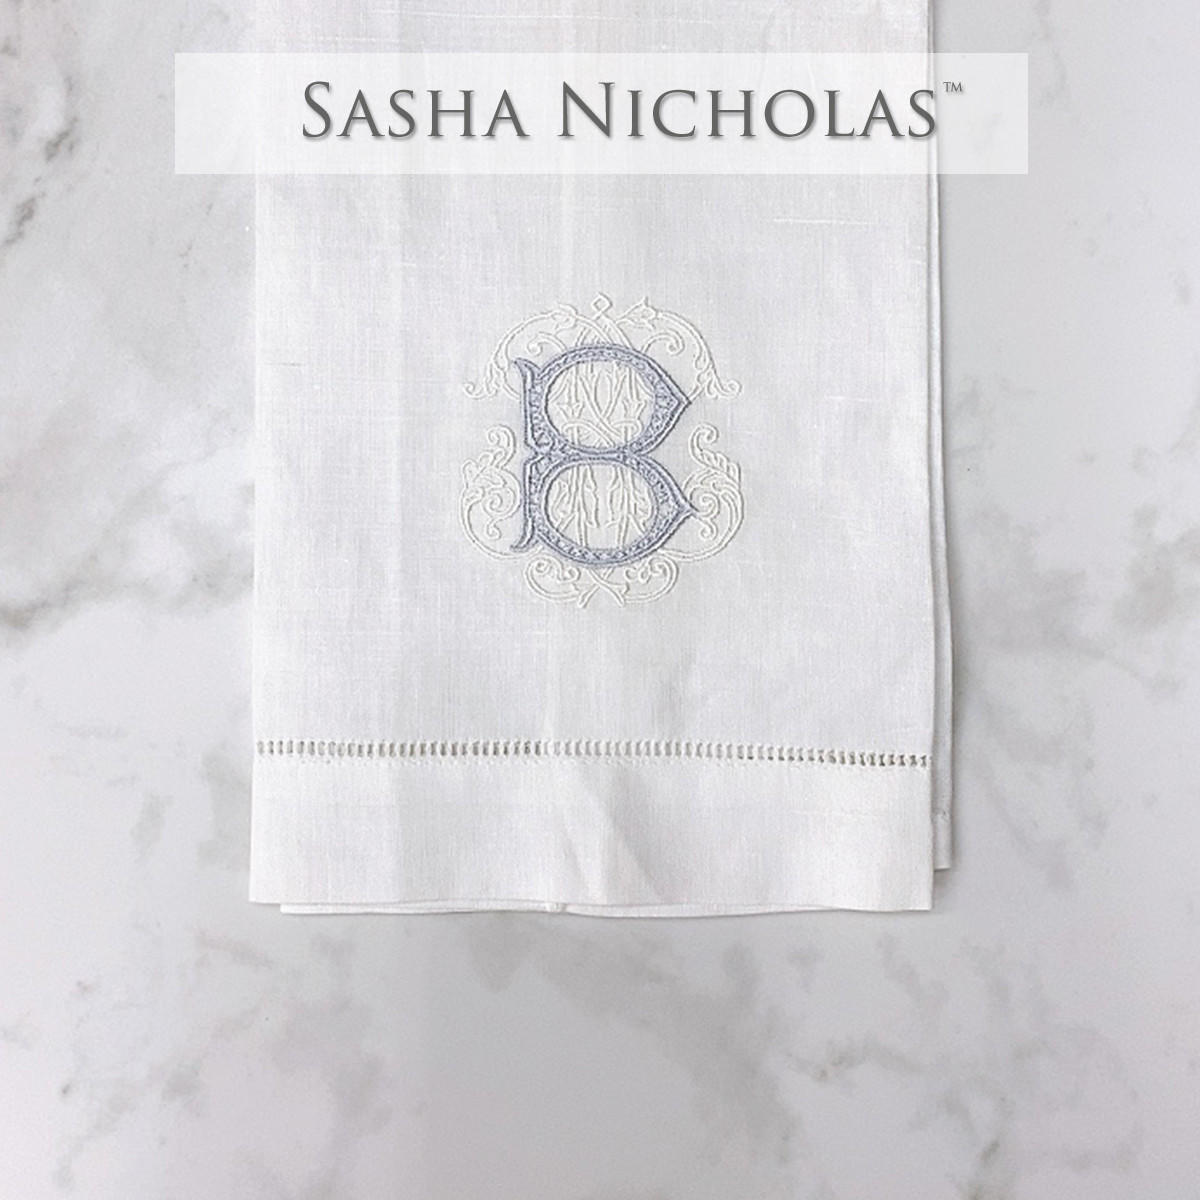  D'Antonio-Aspeitia Sasha Nicholas White Linen Hand Towel | Couture Monogram 'A' 